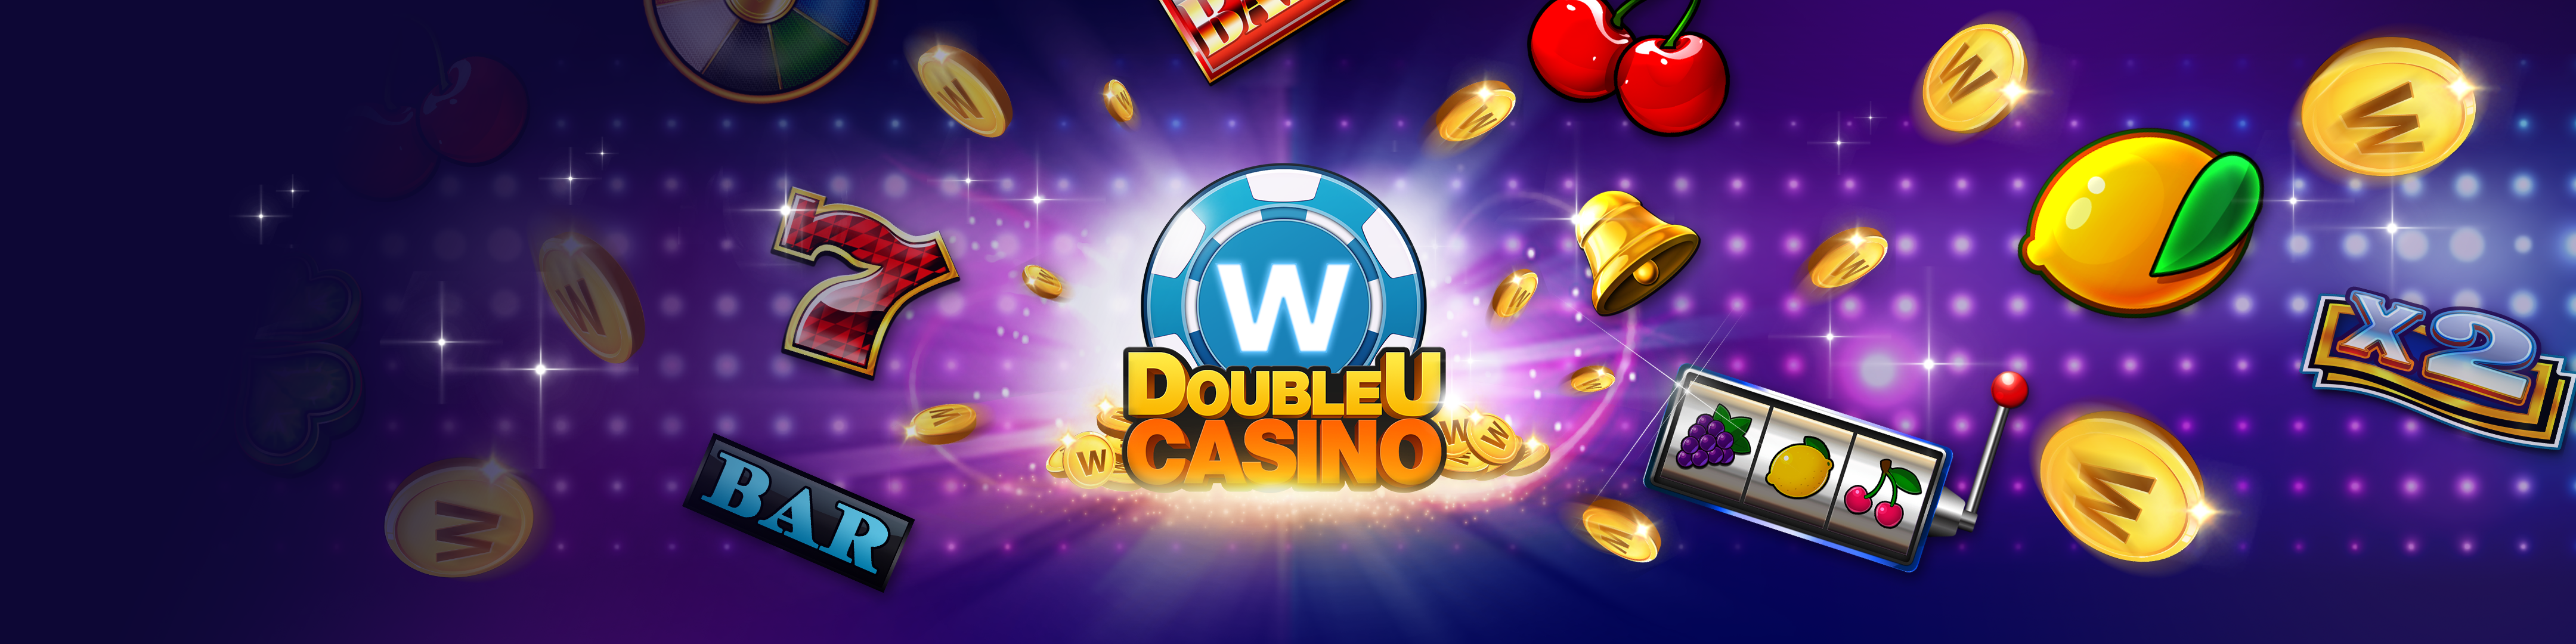 Double u casino slots free